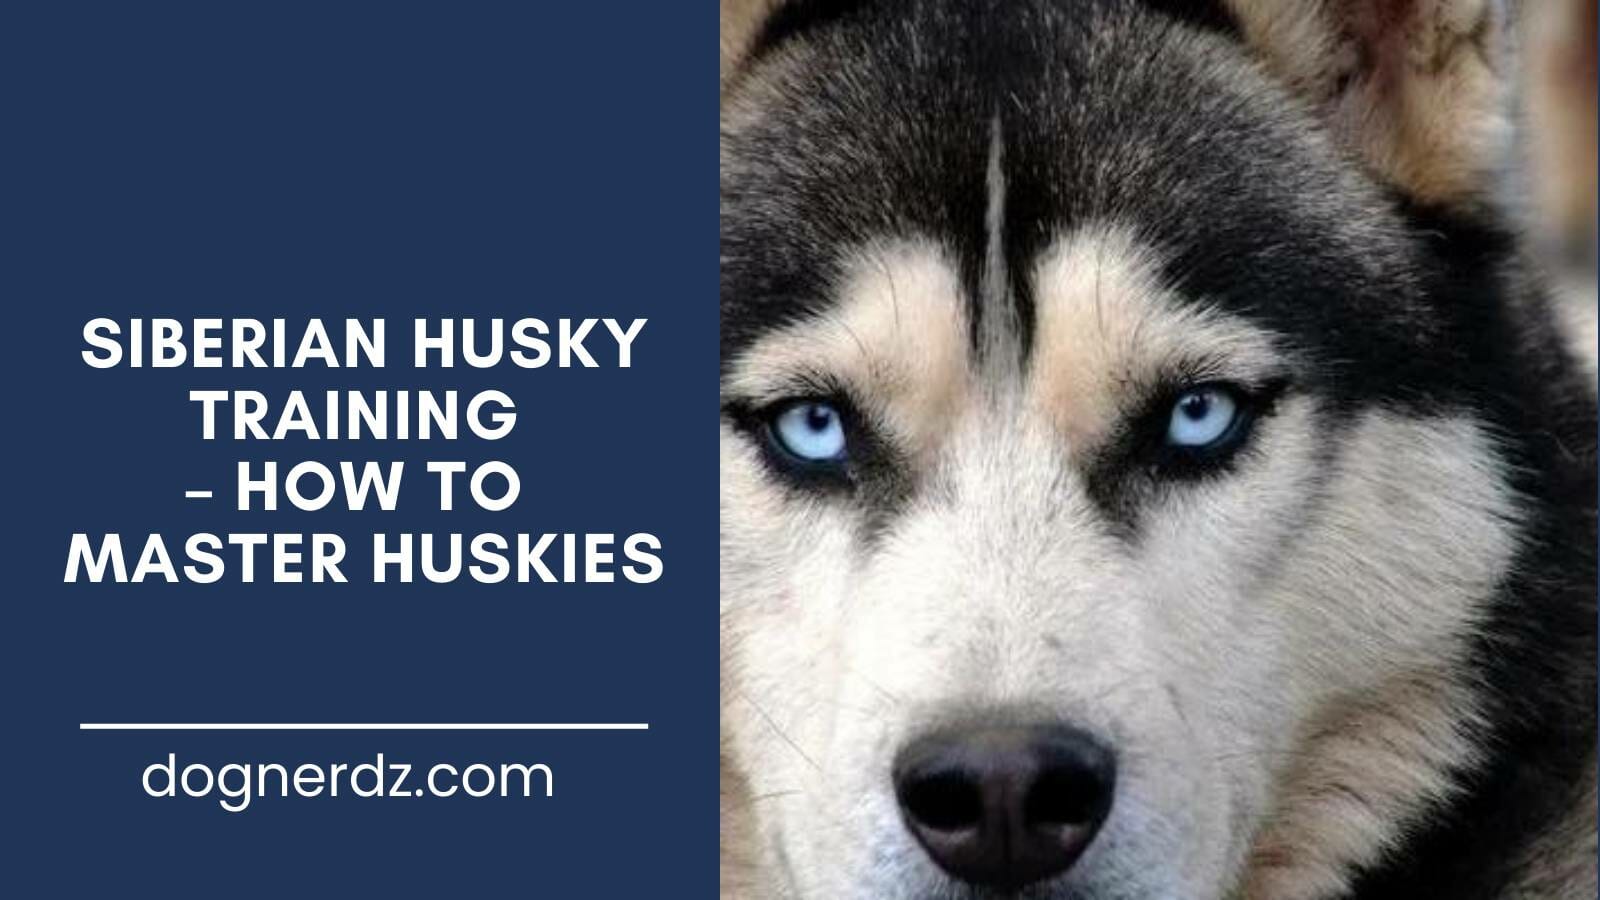 guide to siberian husky training – how to master huskies